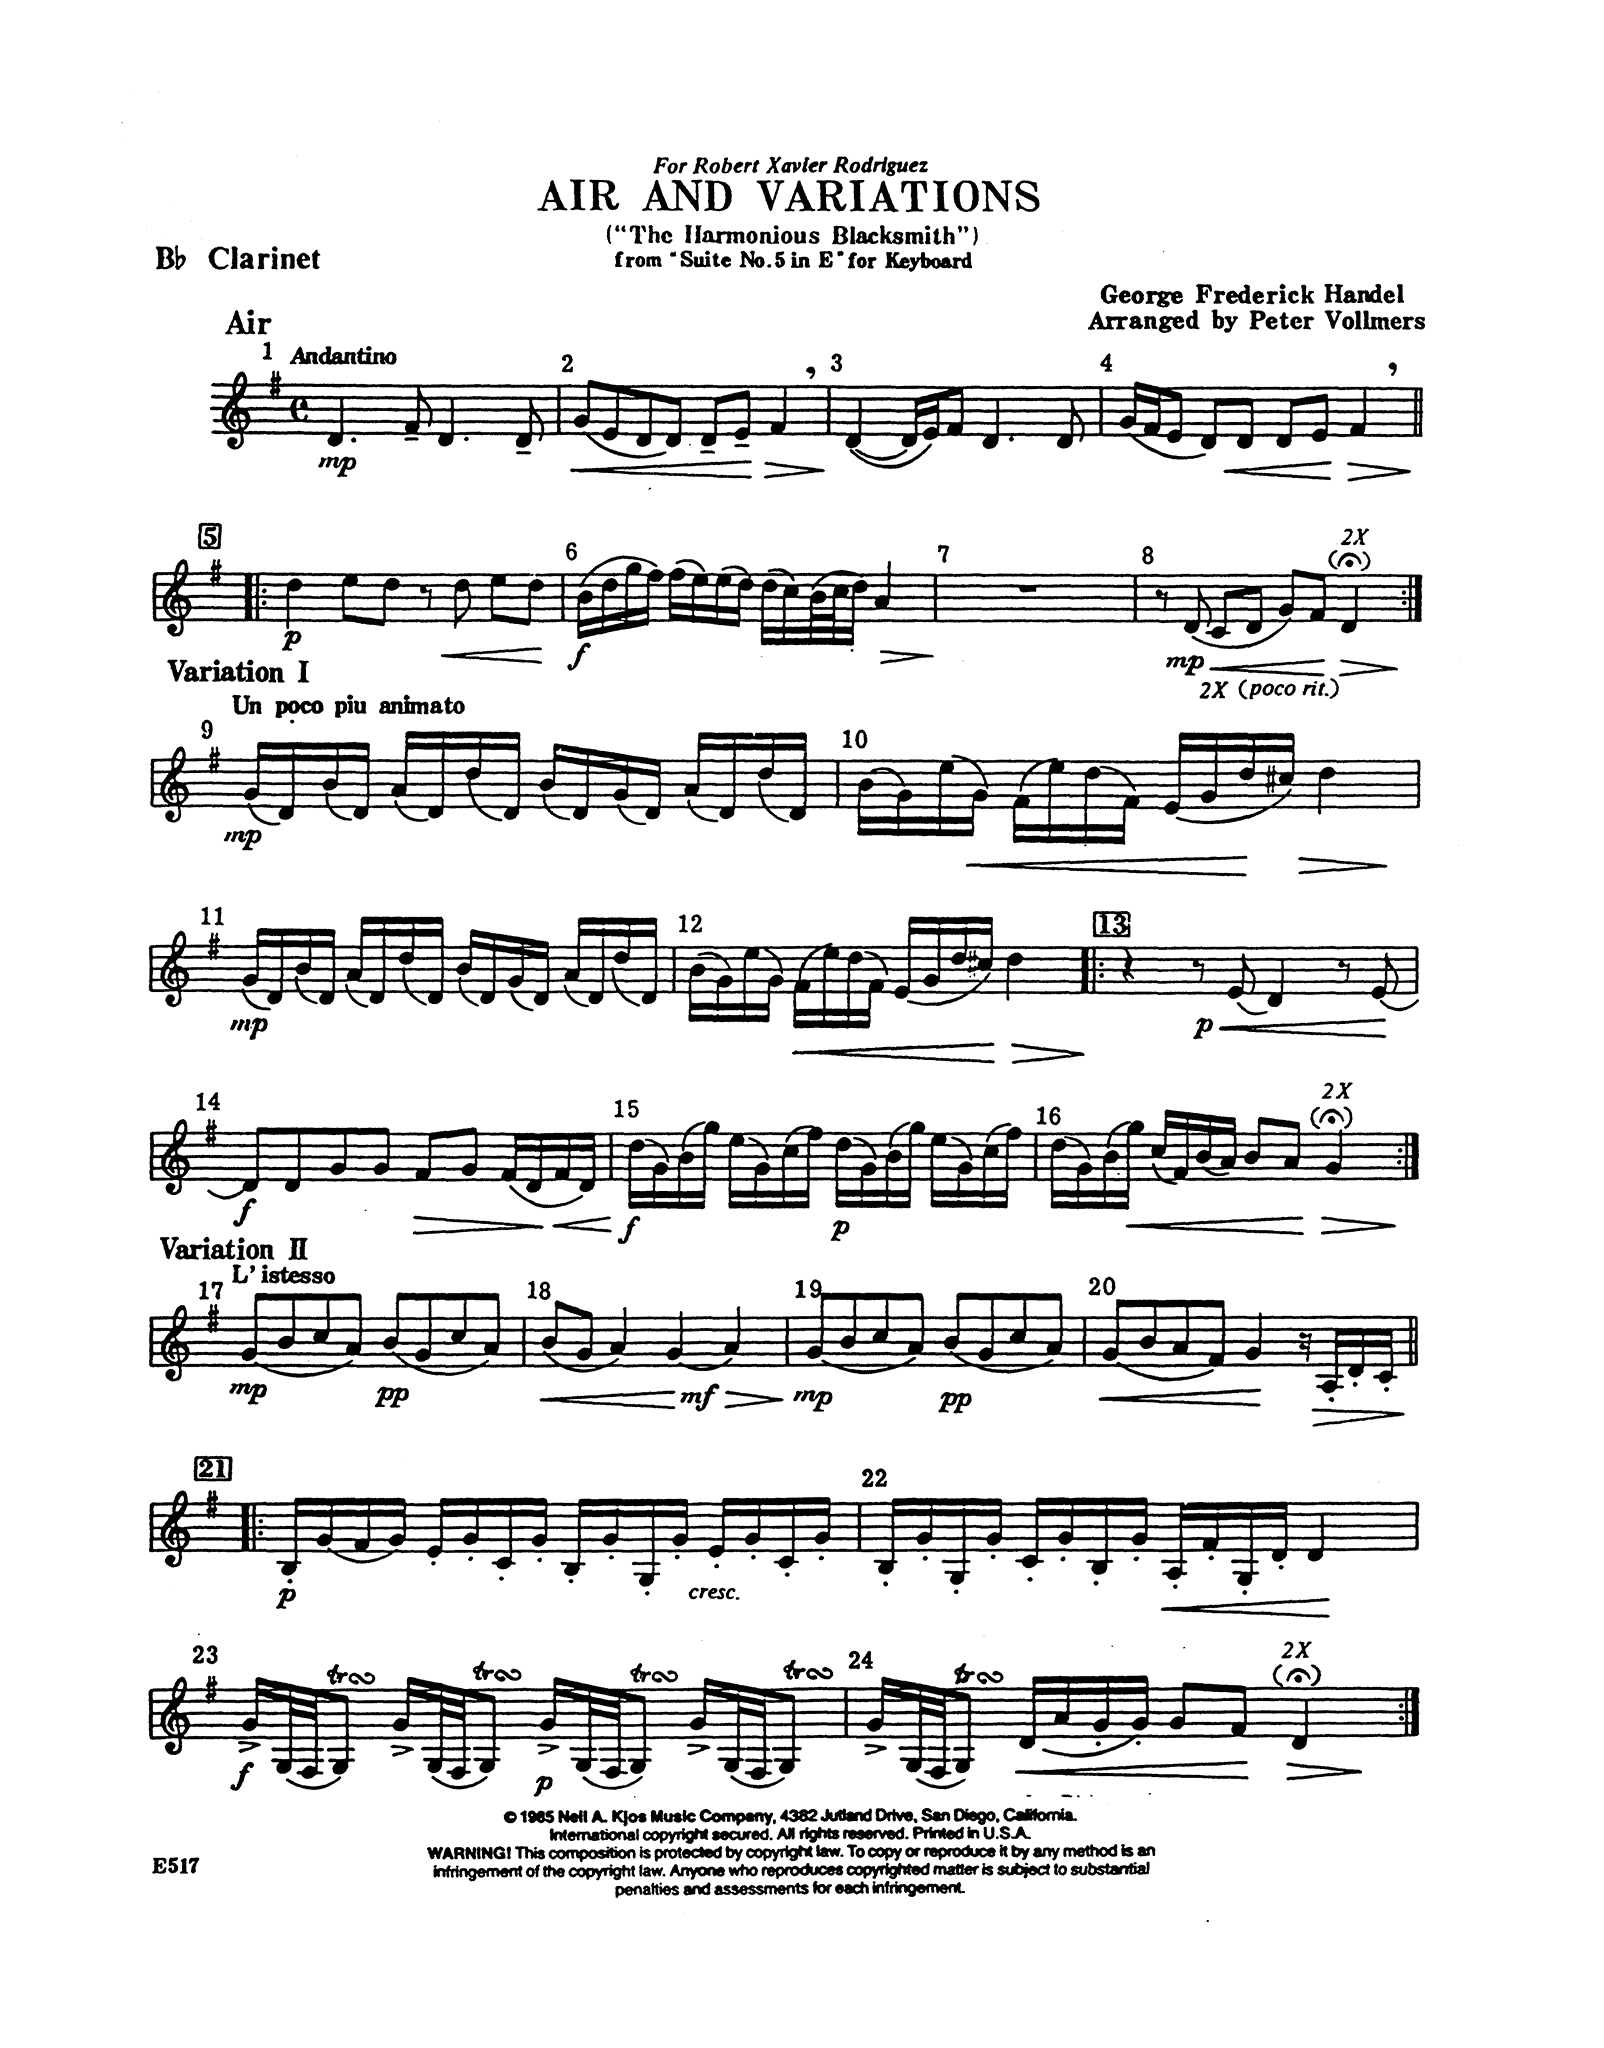 Handel Air & Variations ‘The Harmonious Blacksmith,’ from Suite HWV 430 wind quintet arrangement clarinet part